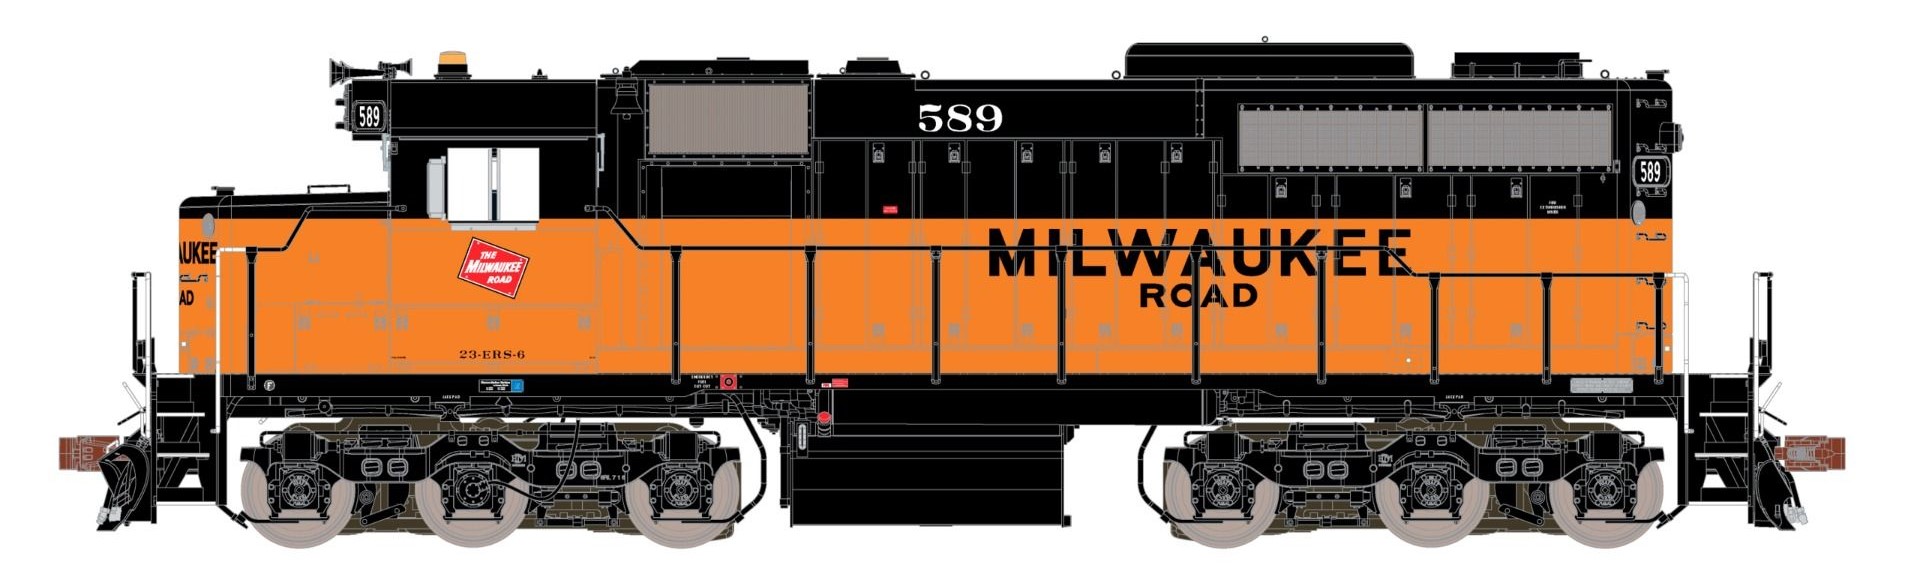 ScaleTrains Museum Quality HO SXT70070 DCC Ready EMD SDL39 Locomotive Milwaukee Road 'Billboard Lettering' MILW #589